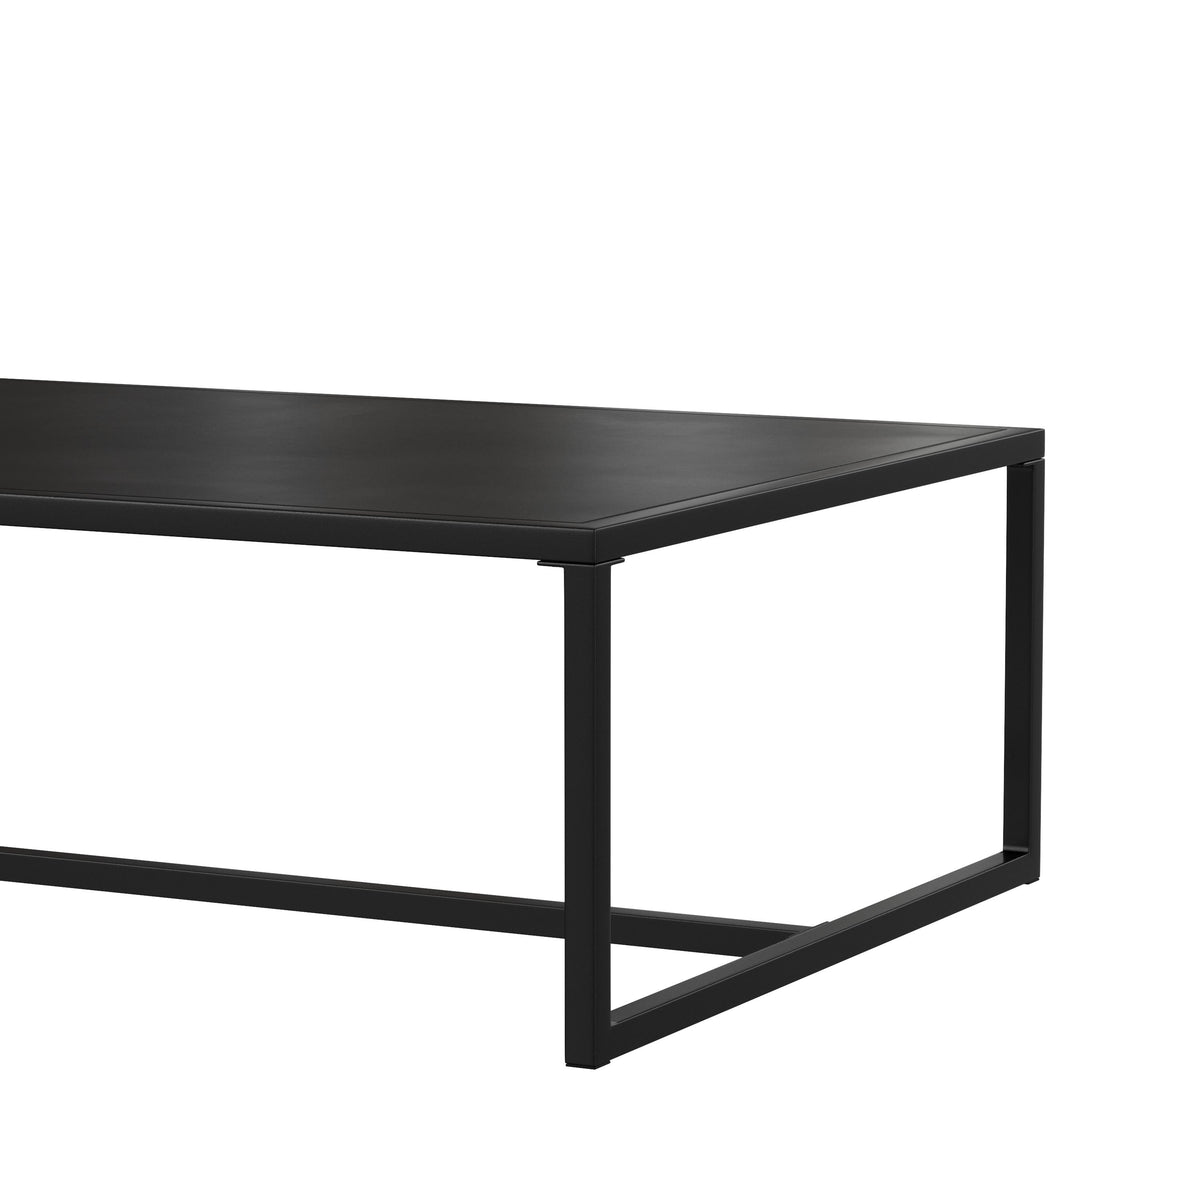 All-Weather Commercial Grade Indoor/Outdoor Steel Patio Coffee Table in Black